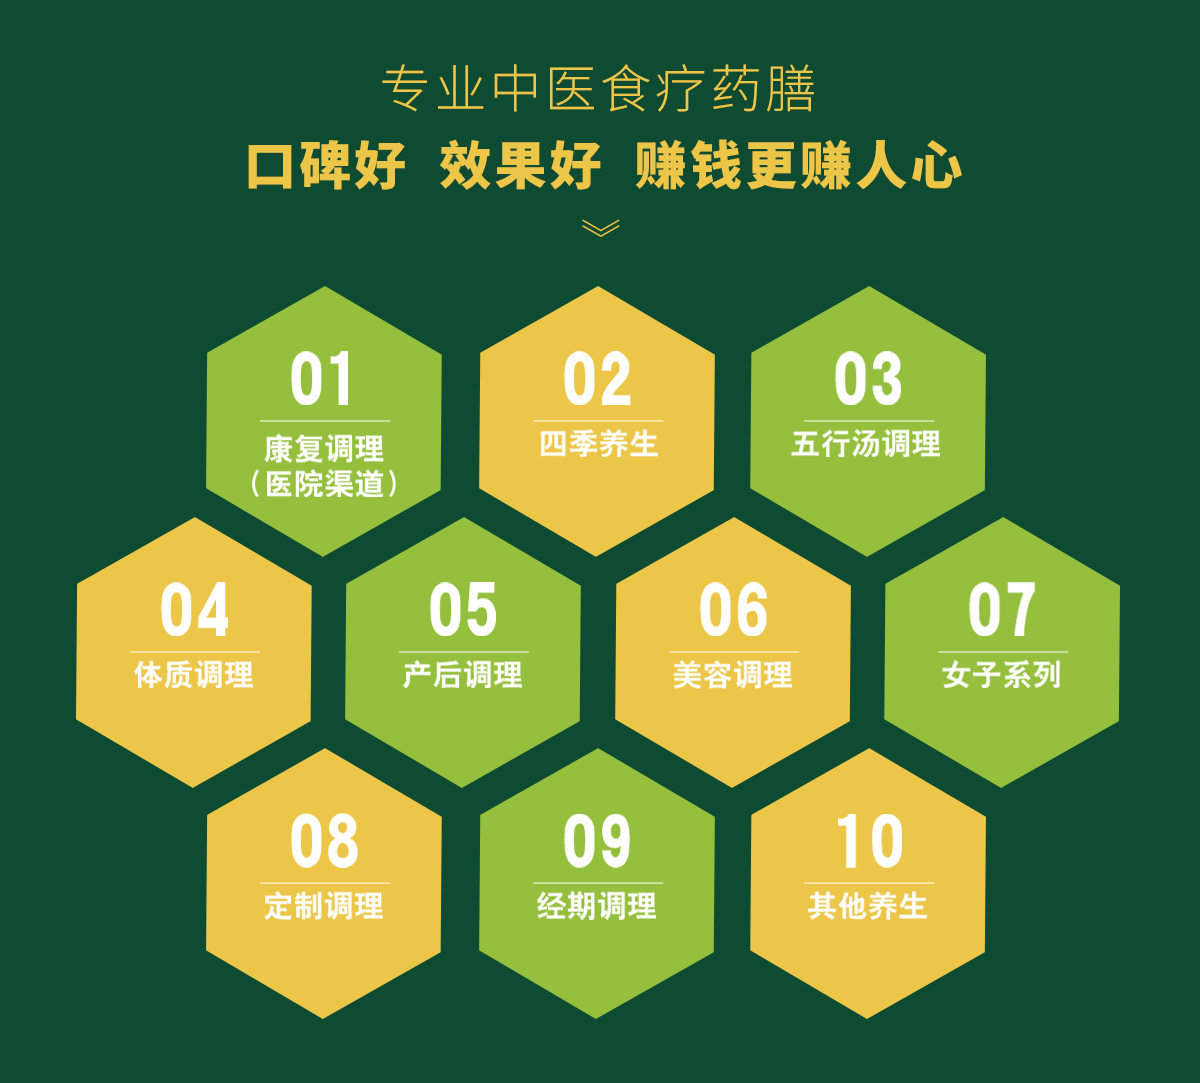  China Merchants website design (2020) 10_ 10.jpg